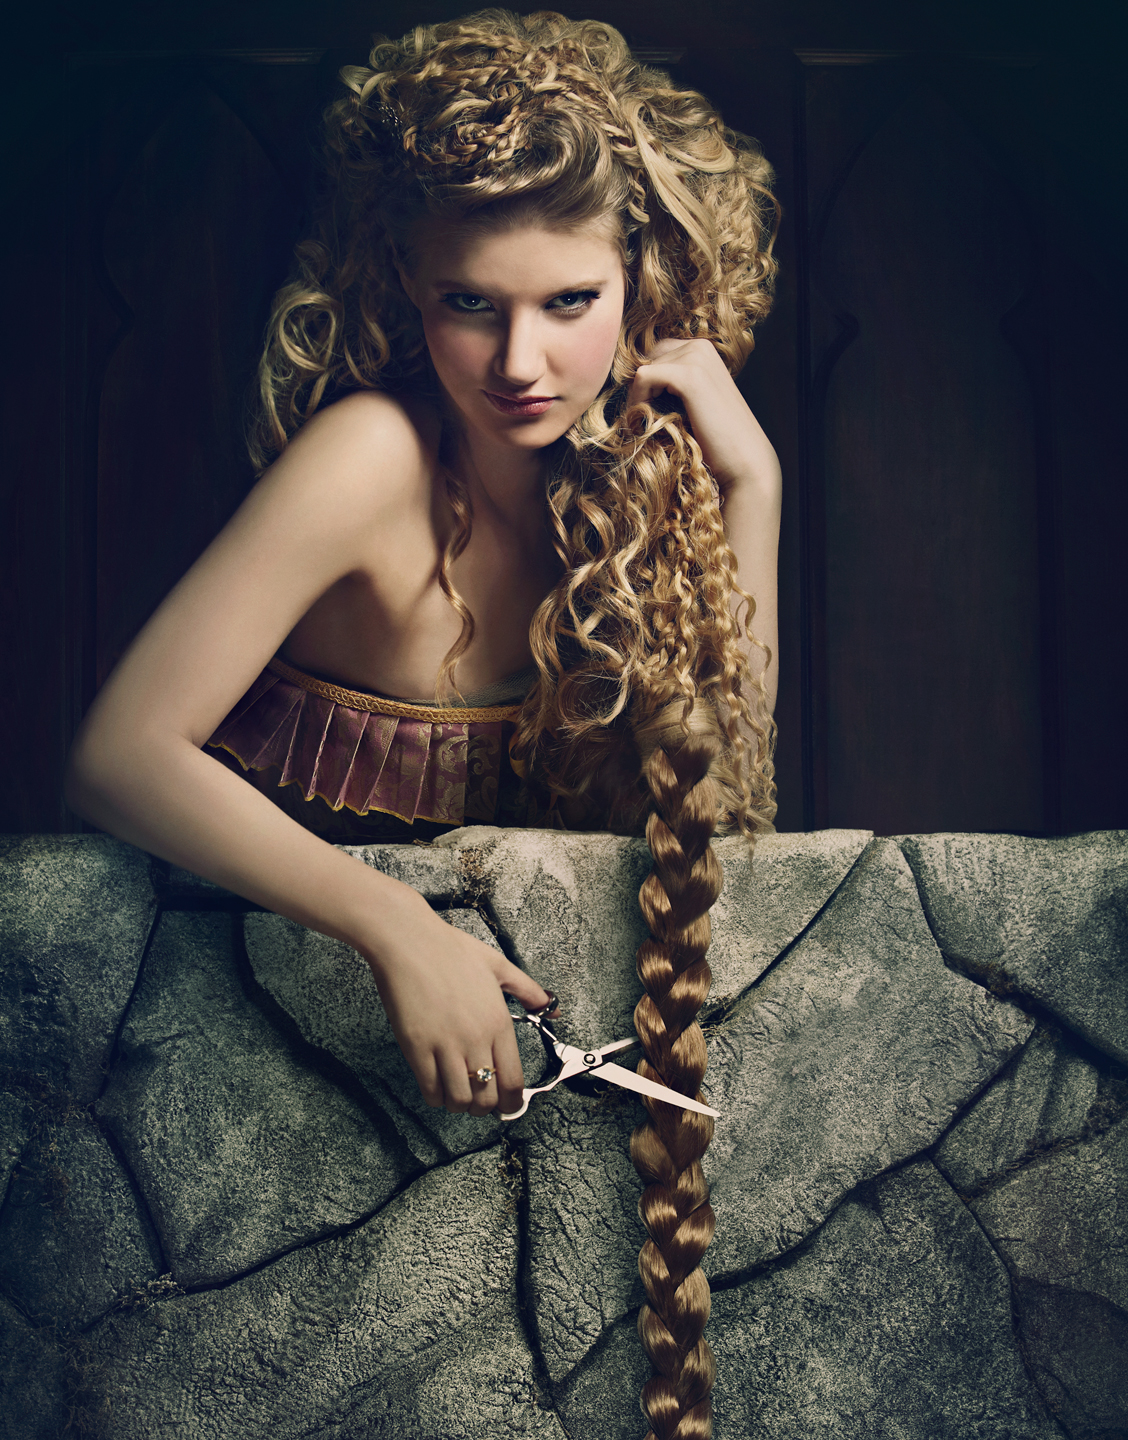 Fairy Fatales rapunzel braid hair wall scissors beauty fantasy Stories humor fairy tales H&M